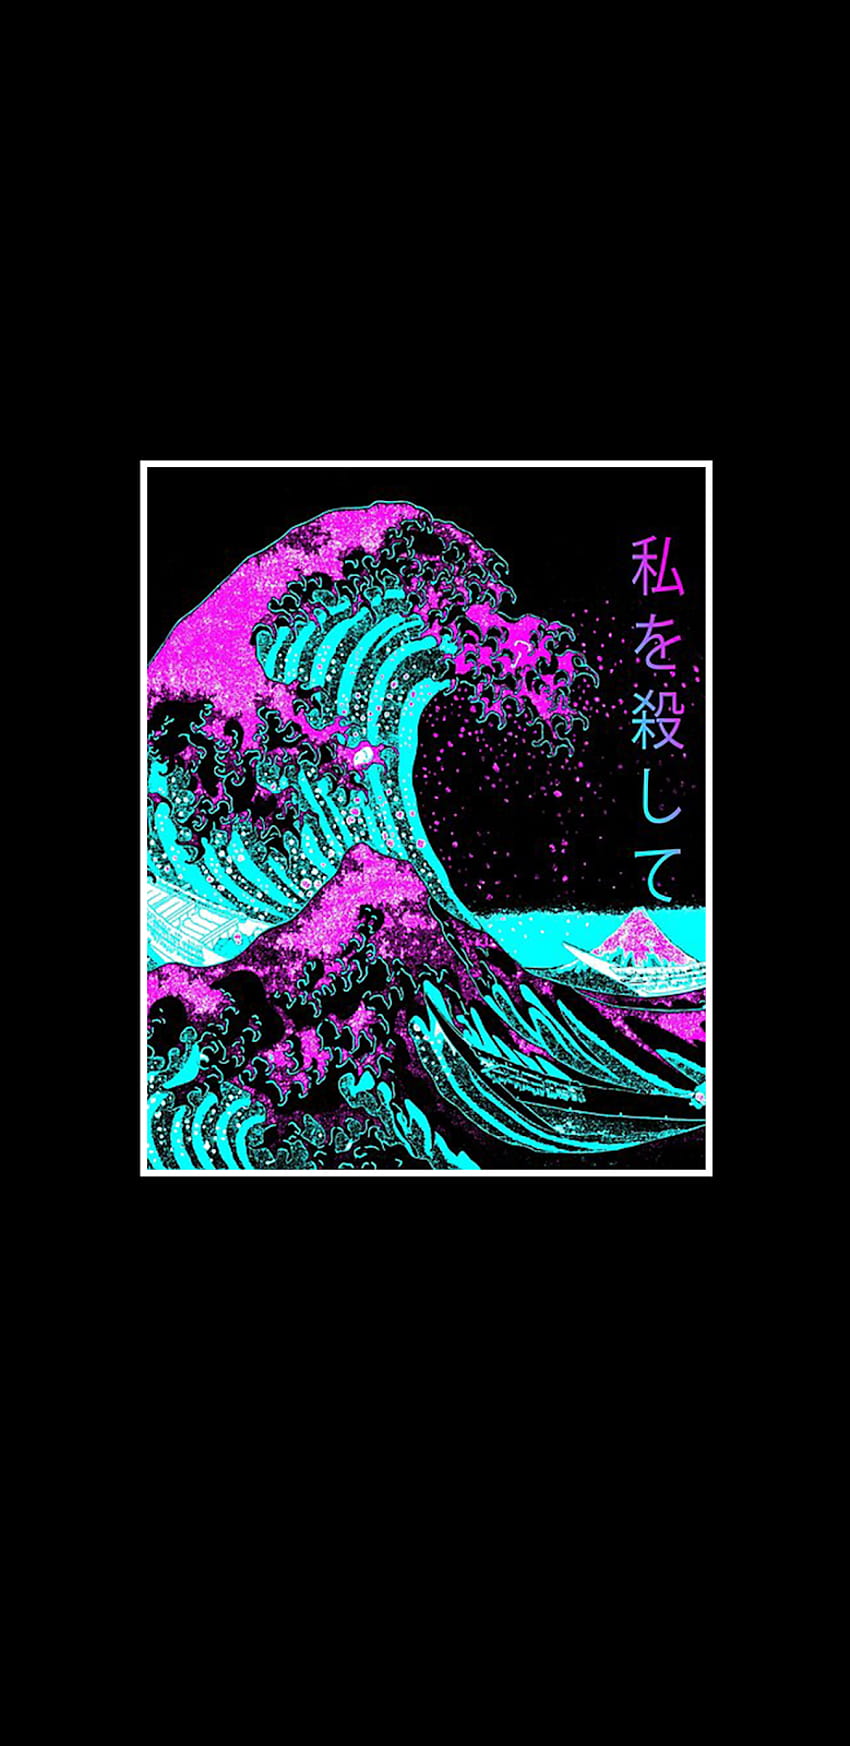 La gran ola del gradiente de Kanagawa, las grandes olas de Kanagawa fondo de pantalla del teléfono